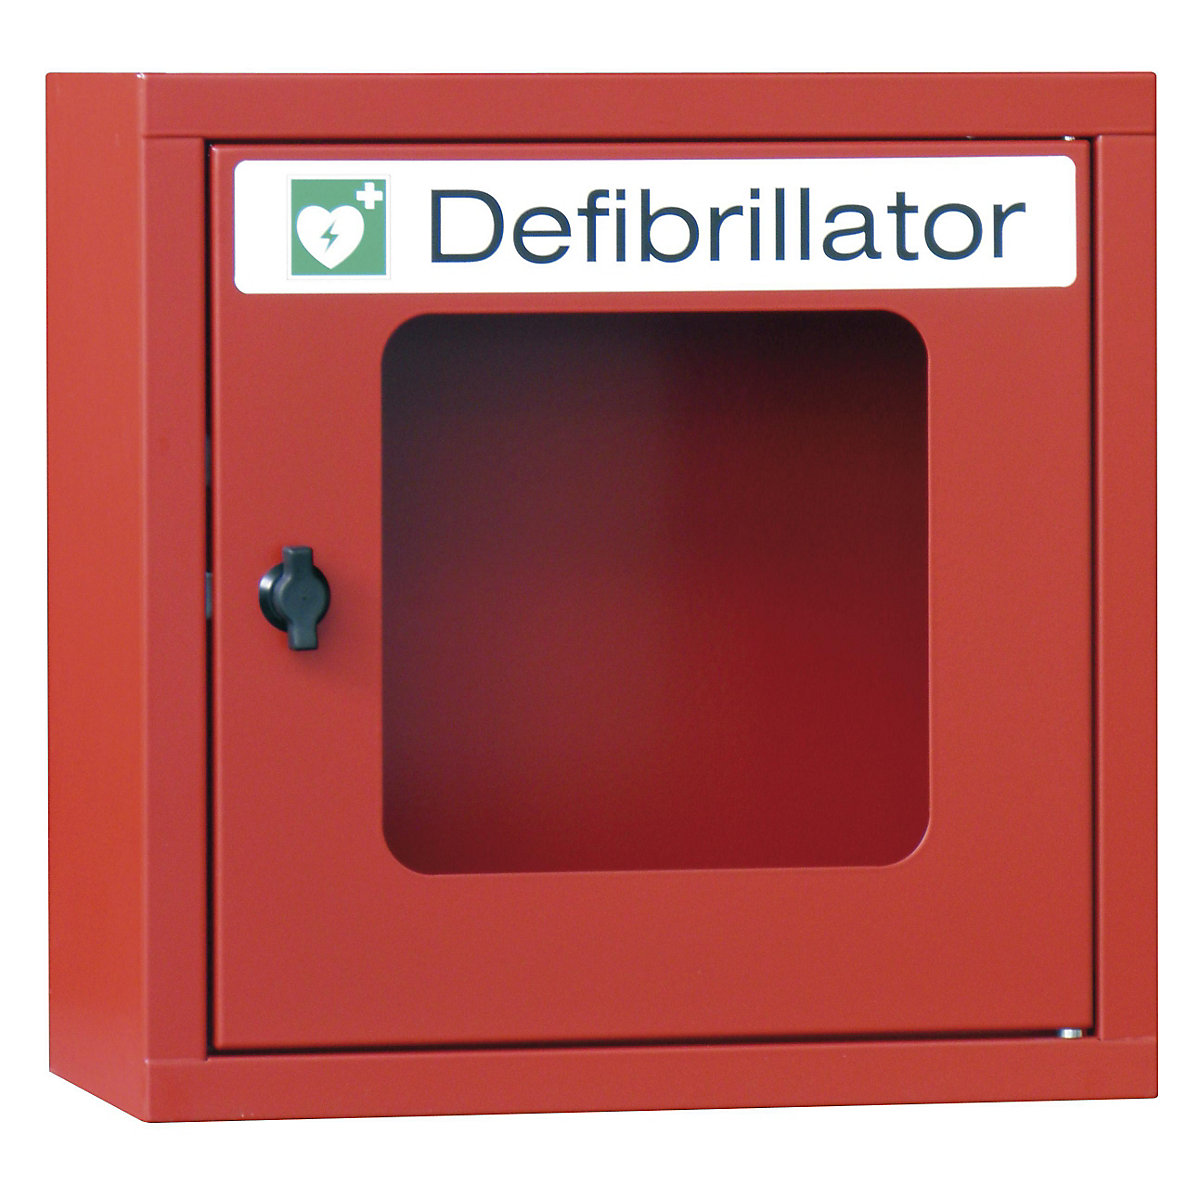 Defibrillator cupboard - Pavoy